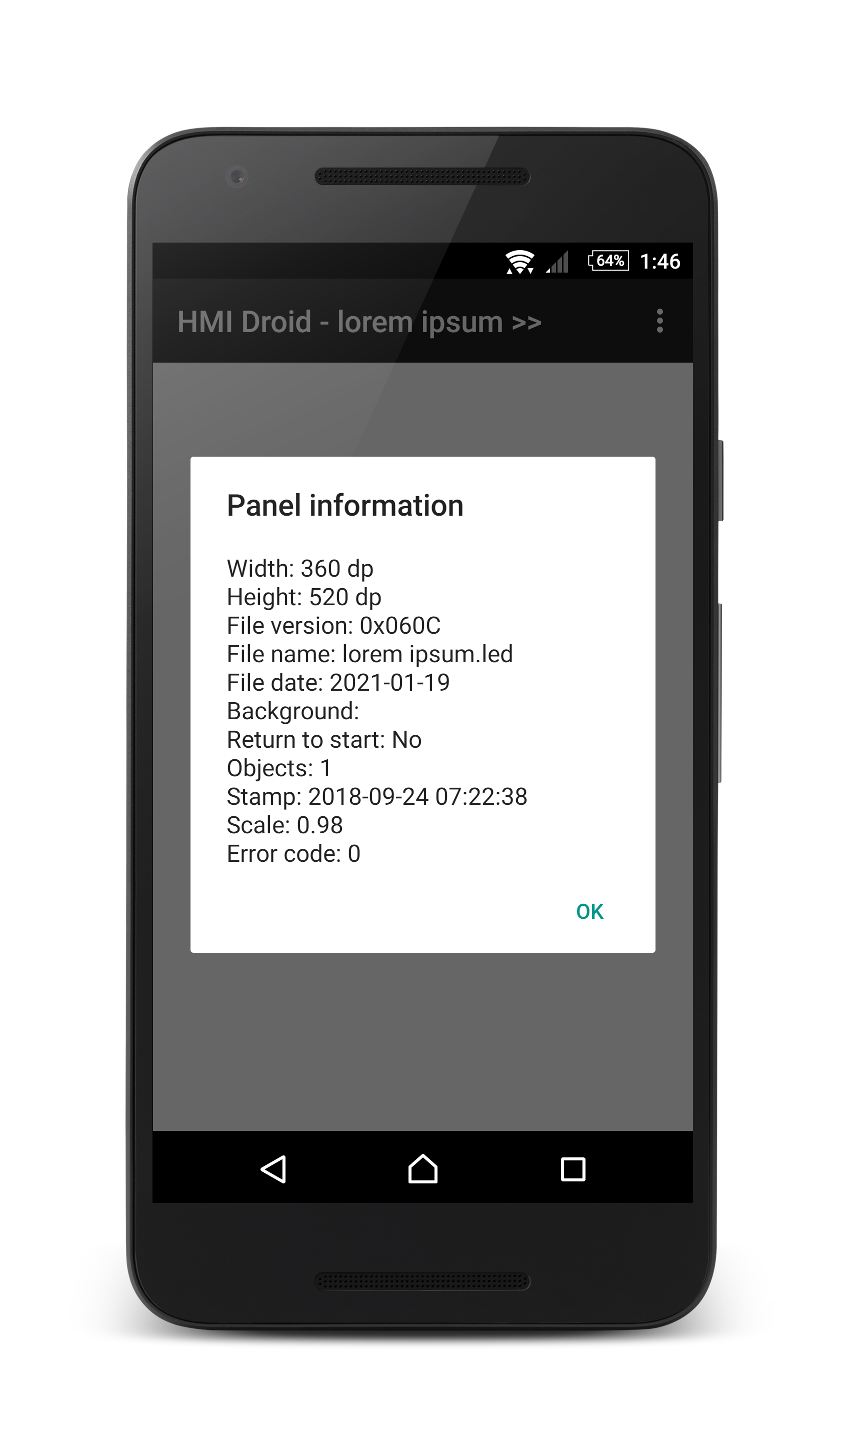 HMI Droid - Panel (page) Information